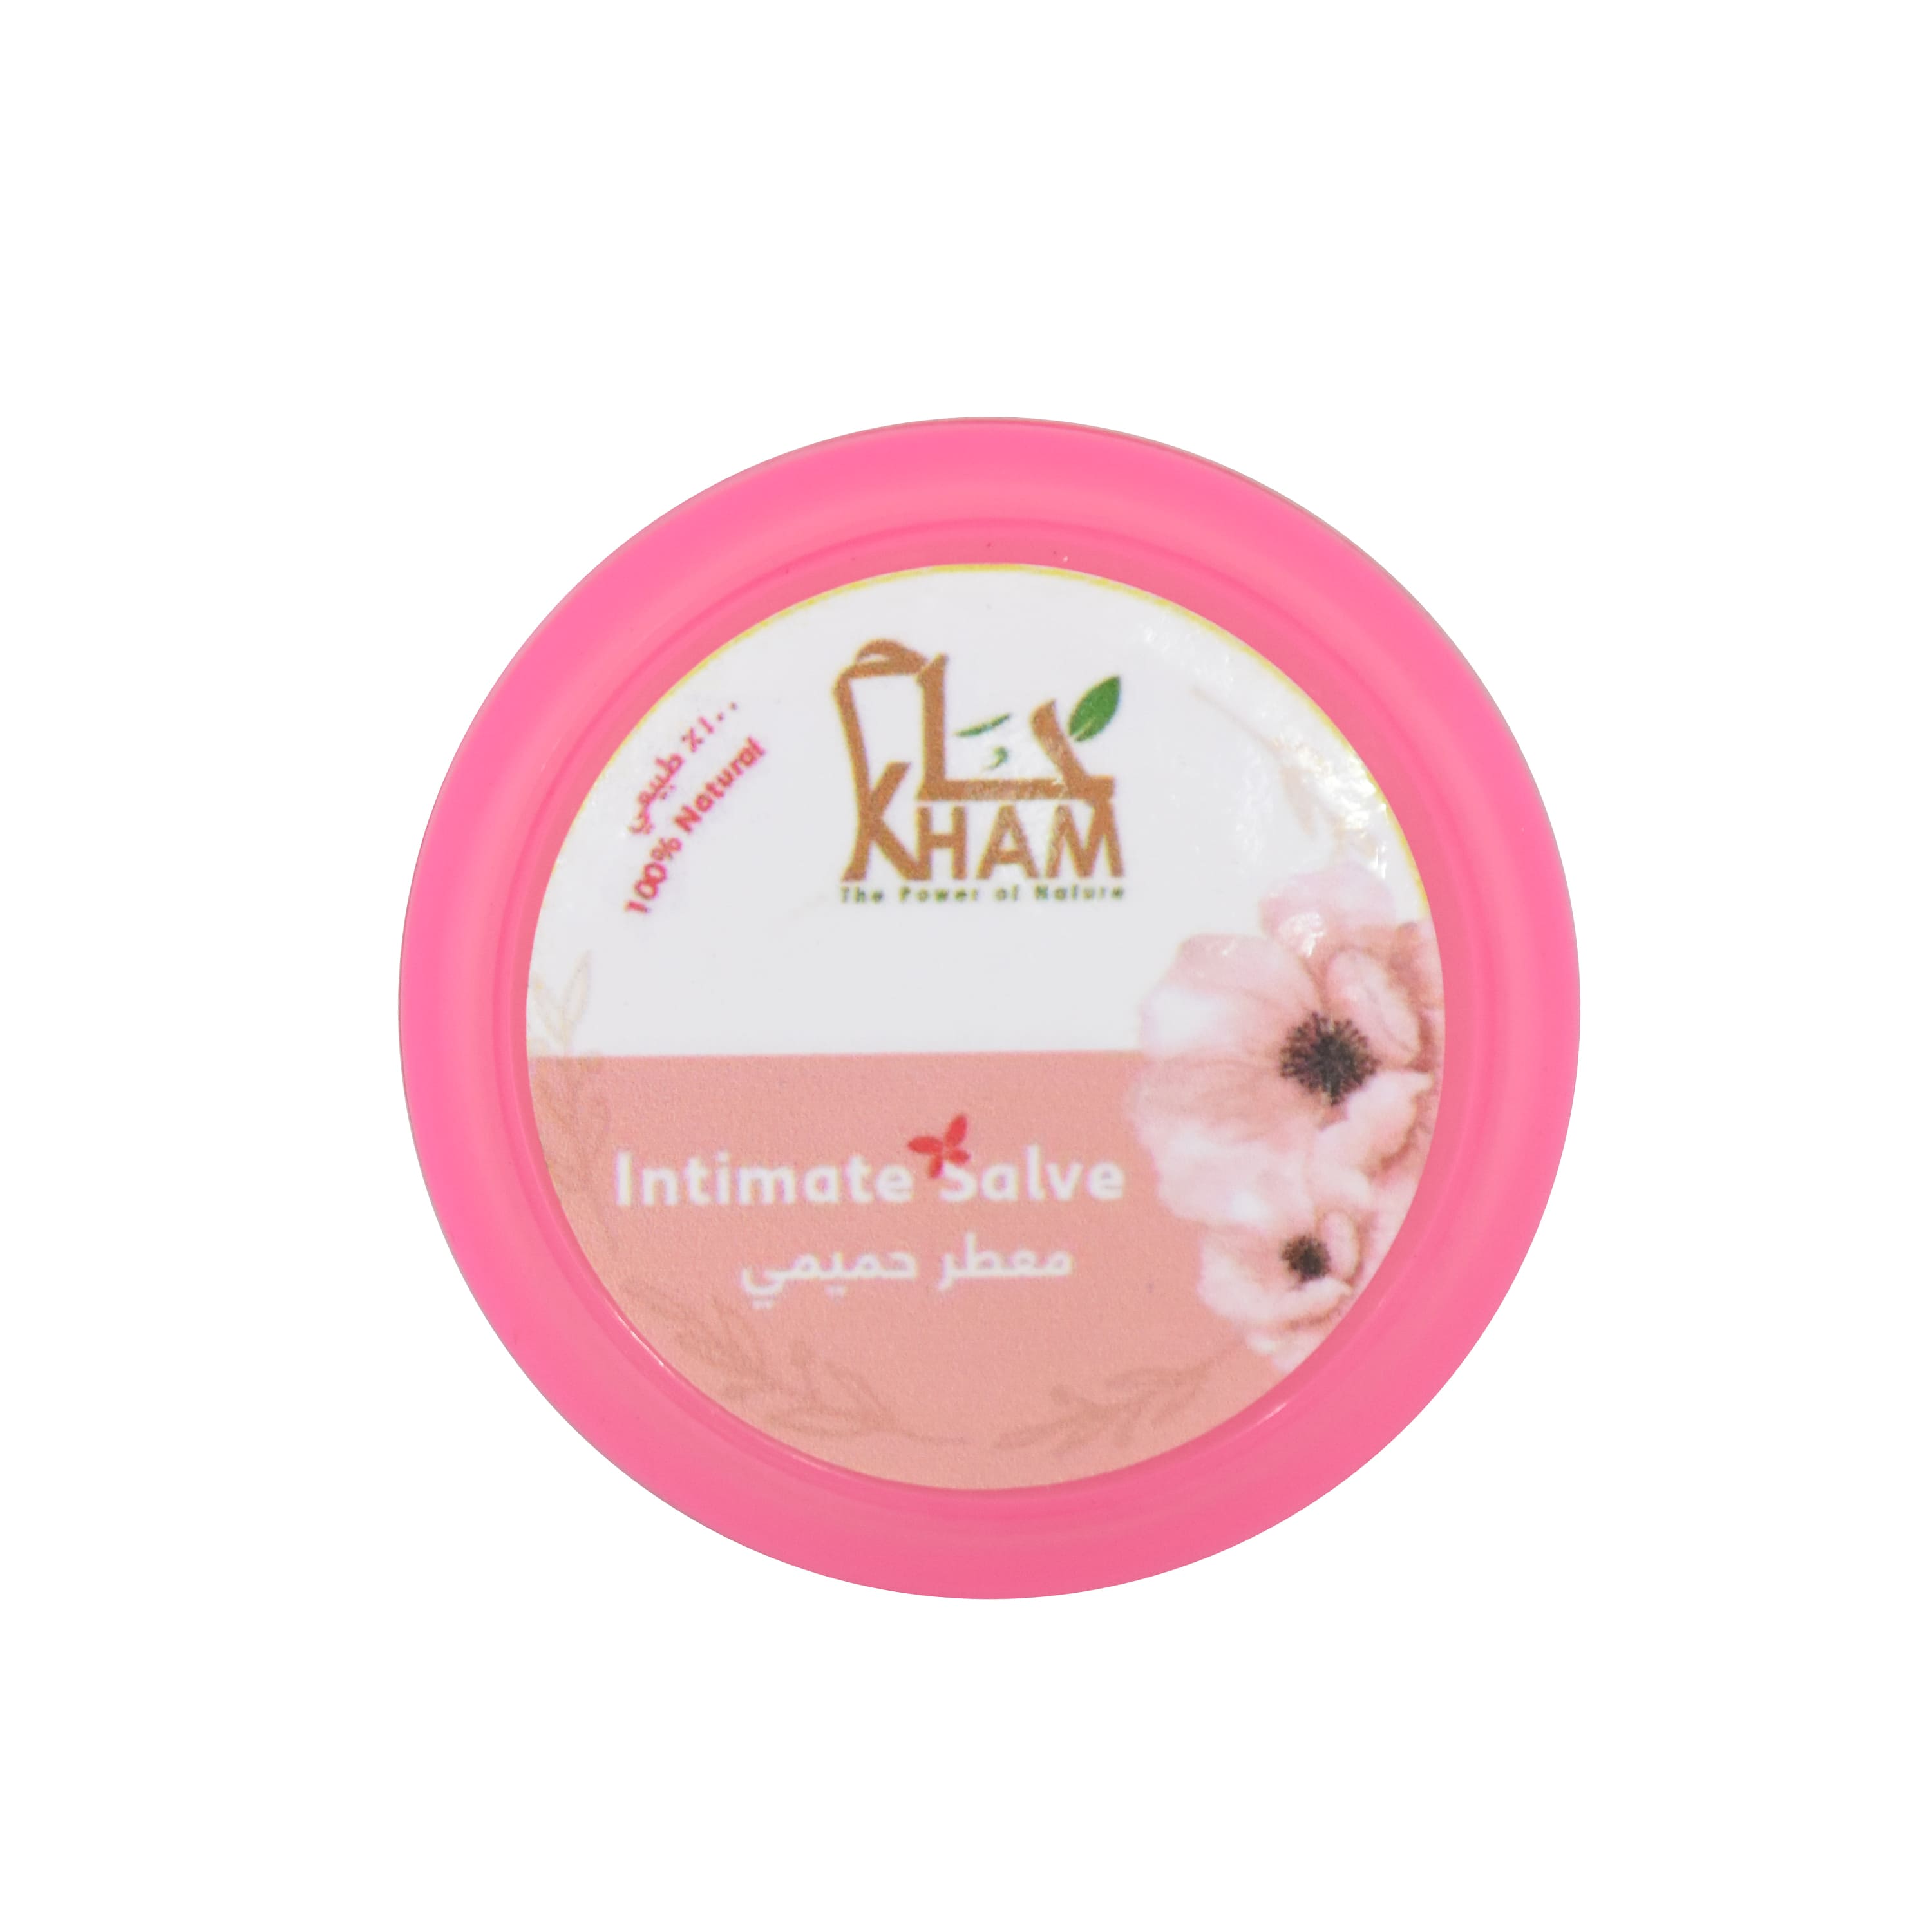 Kham Rose Intimate Salve (100 ml) To perfume and moisturize sensitive areas